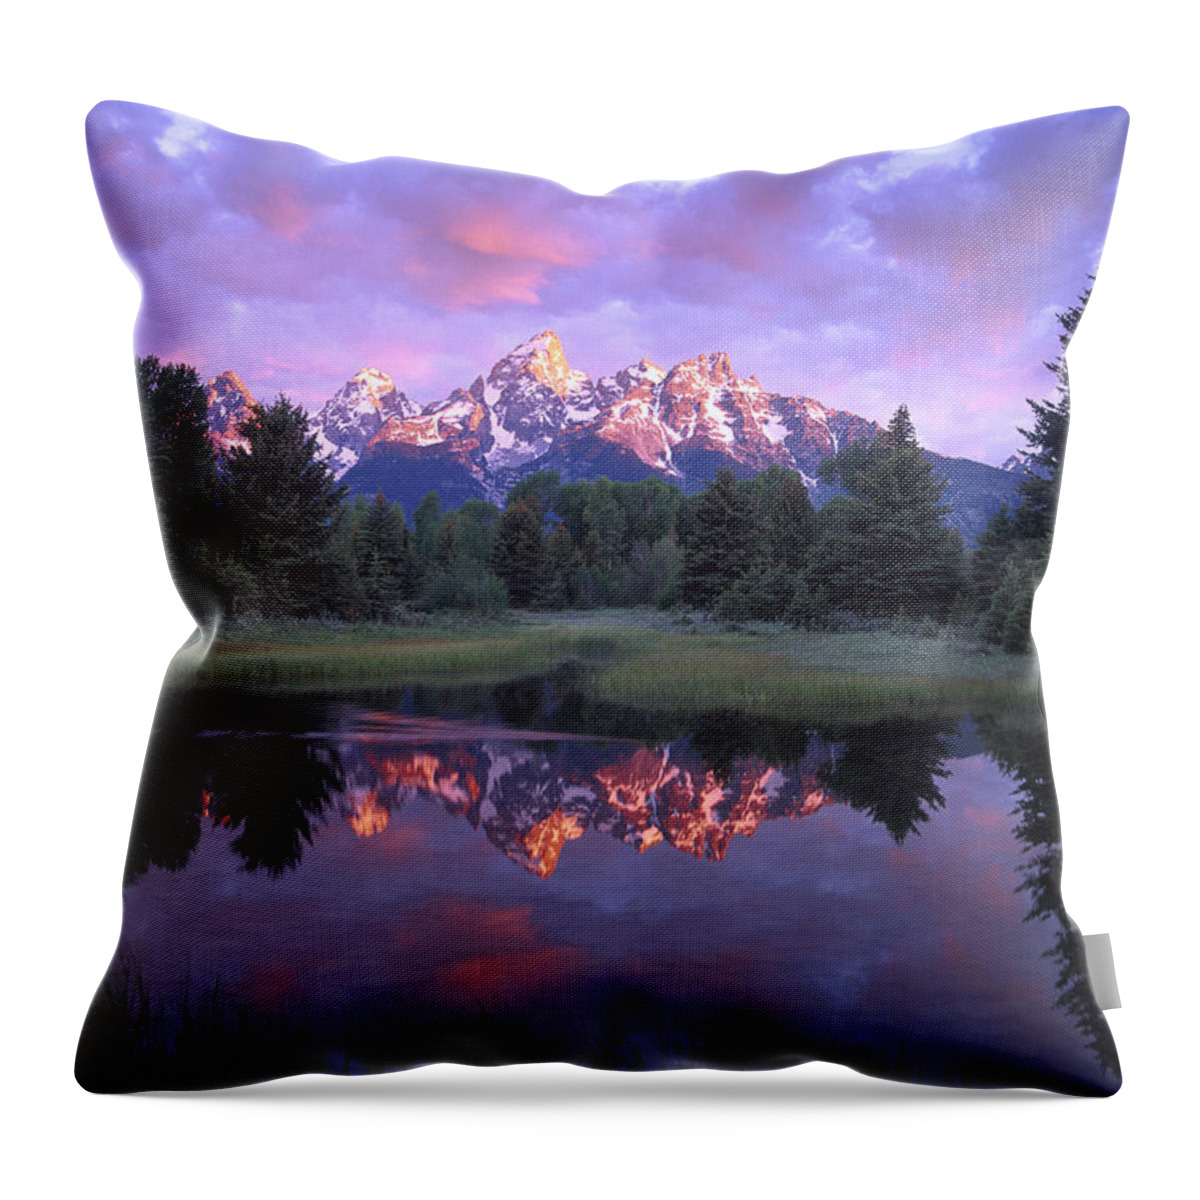 00173534 Throw Pillow featuring the photograph Teton Range At Sunrise Schwabacher by Tim Fitzharris